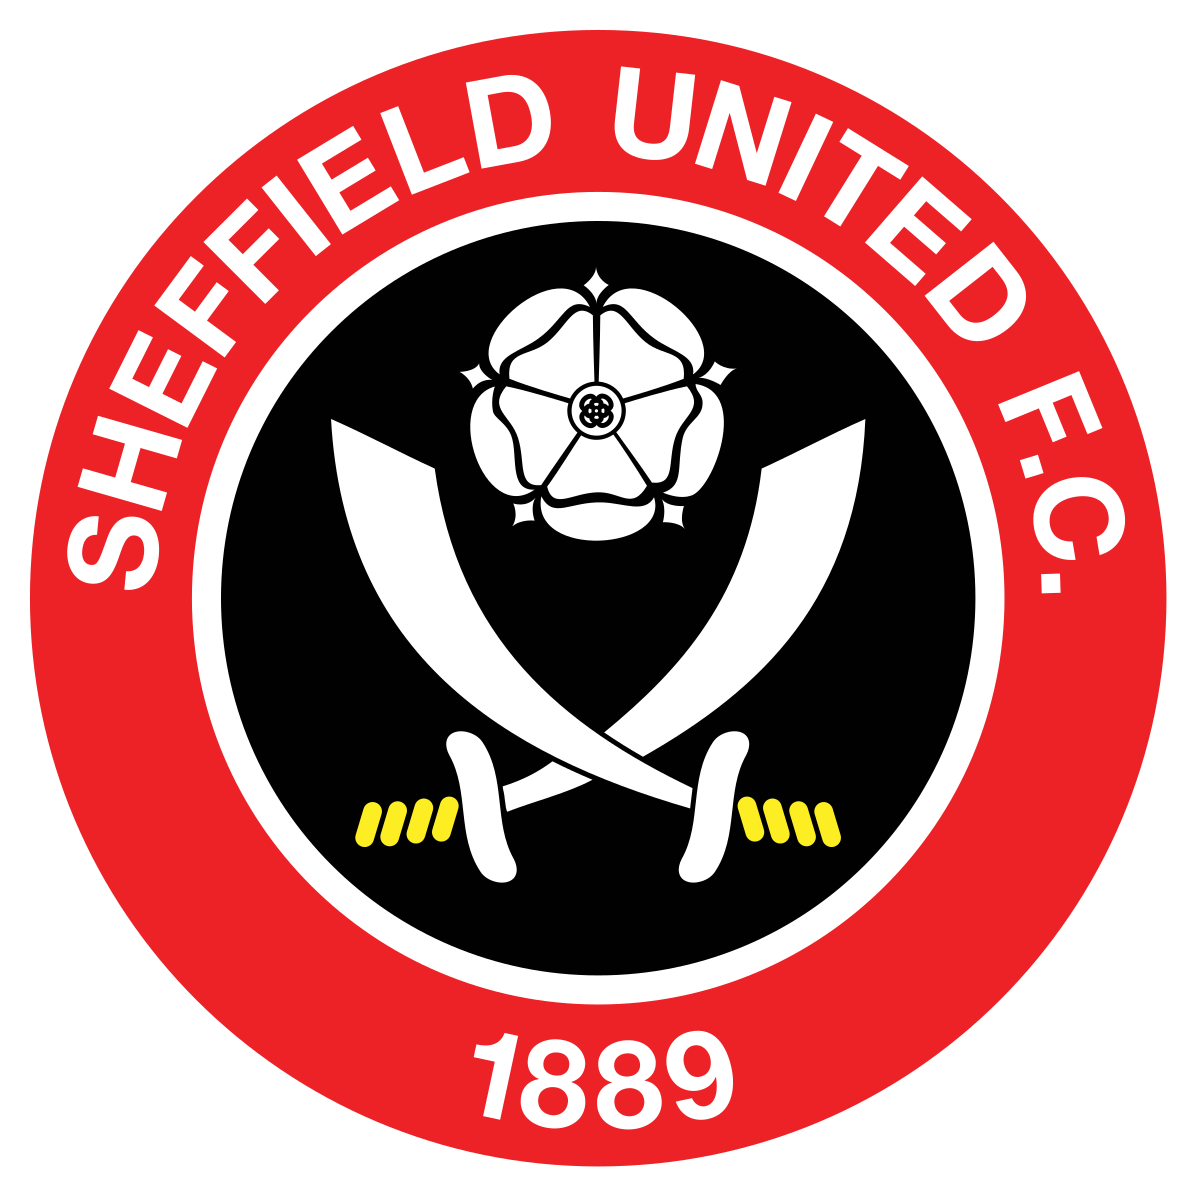 Sheffield Utd U21